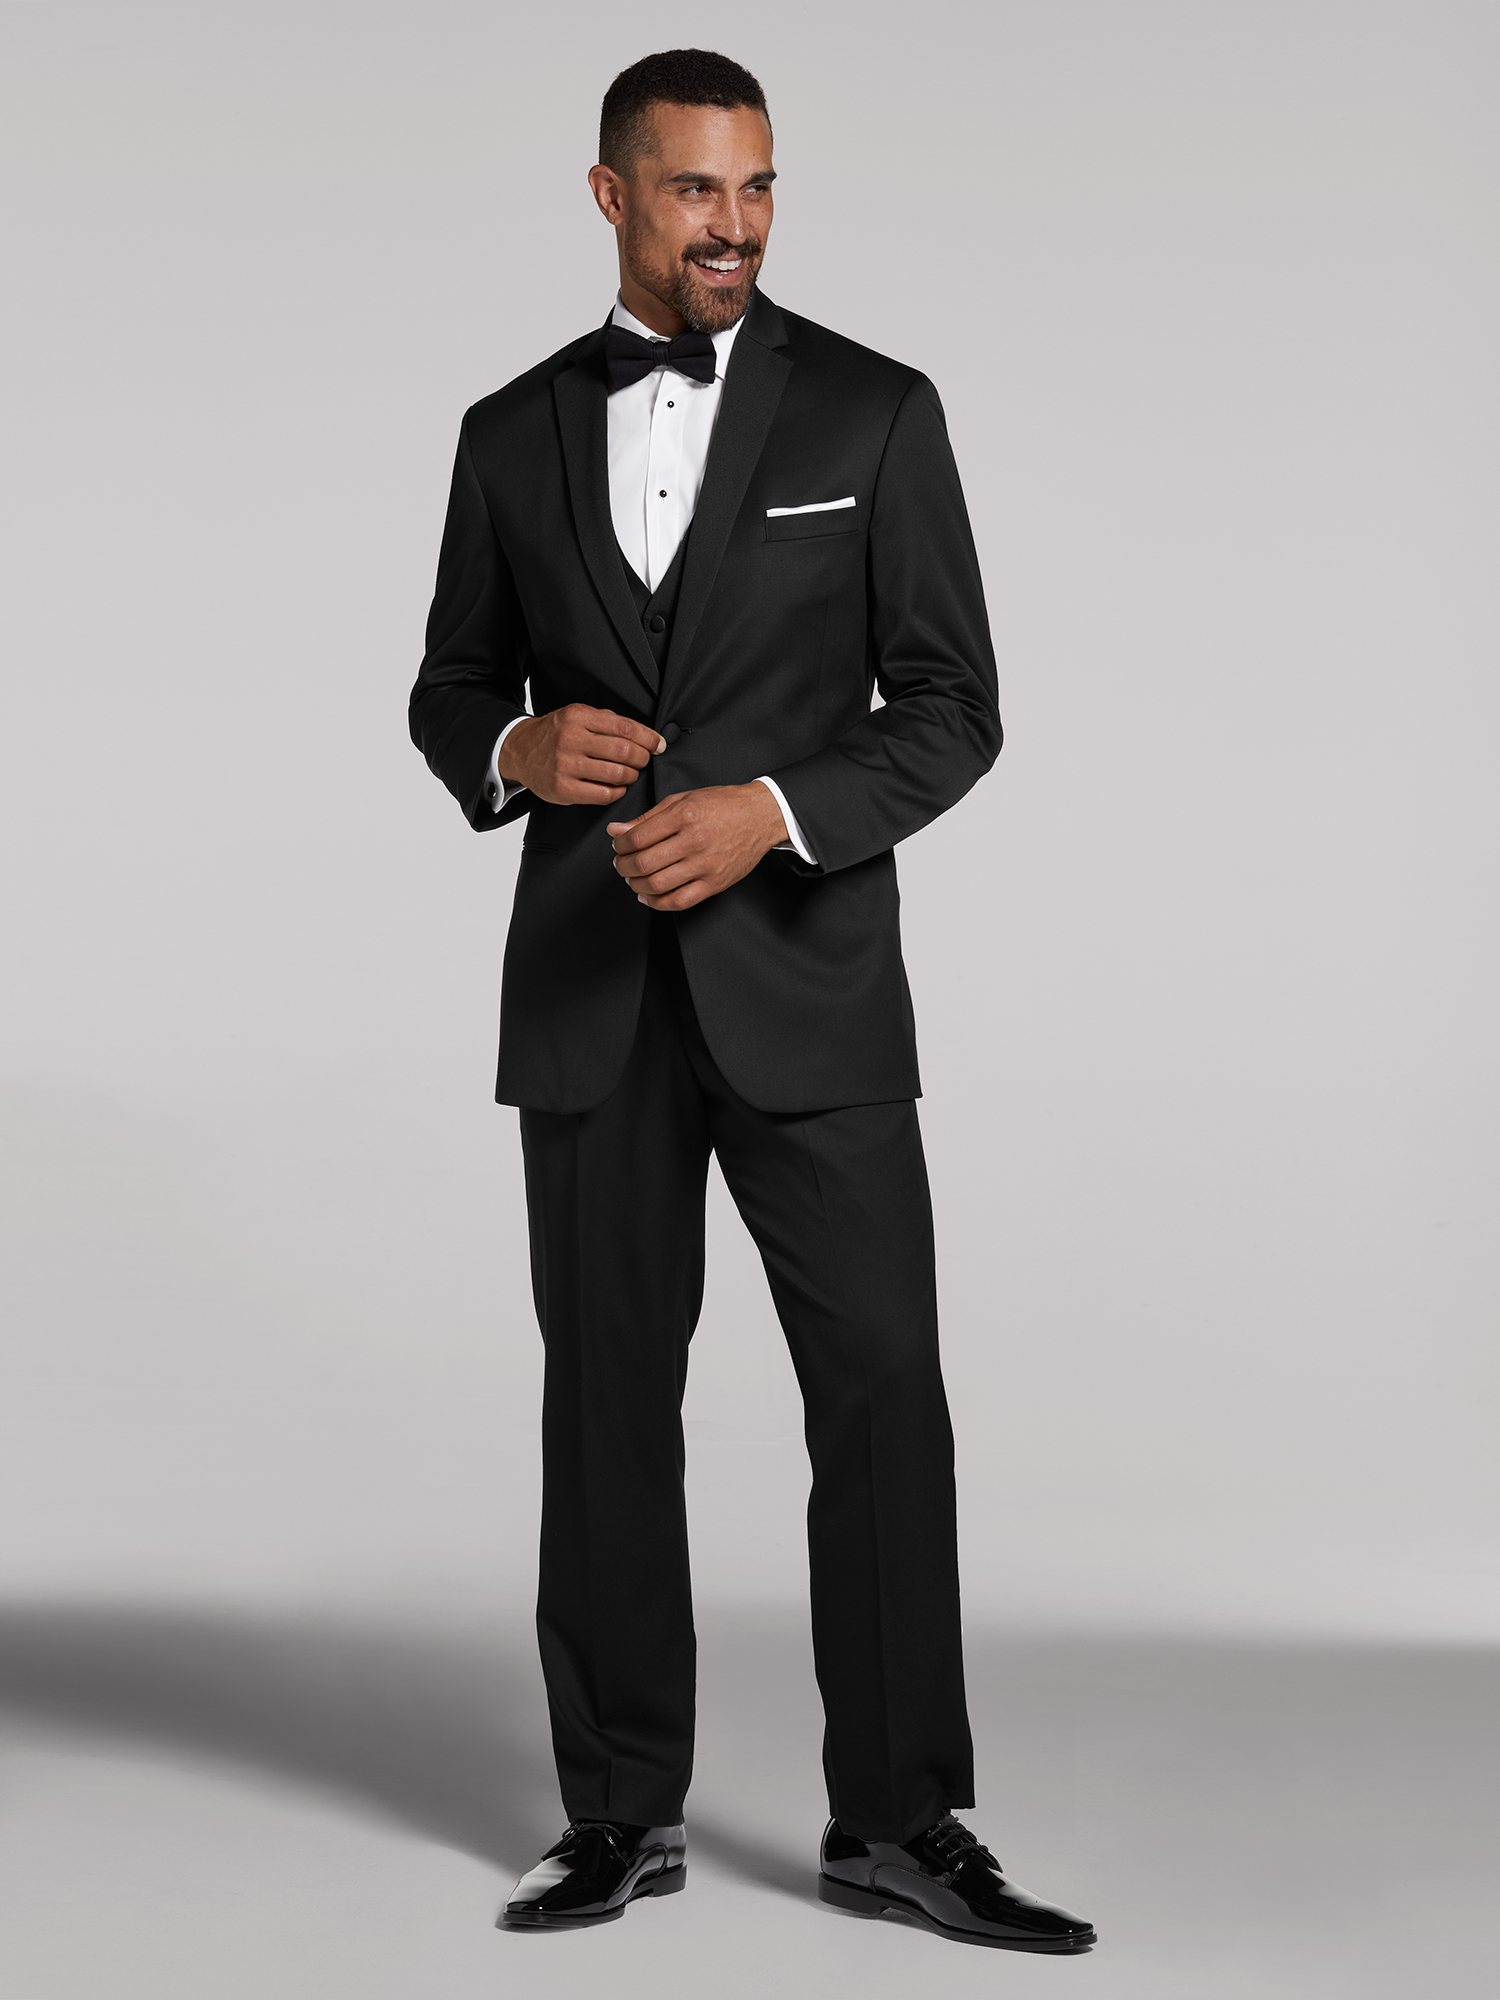 Best Wedding Suits for Men & Wedding Tuxedos